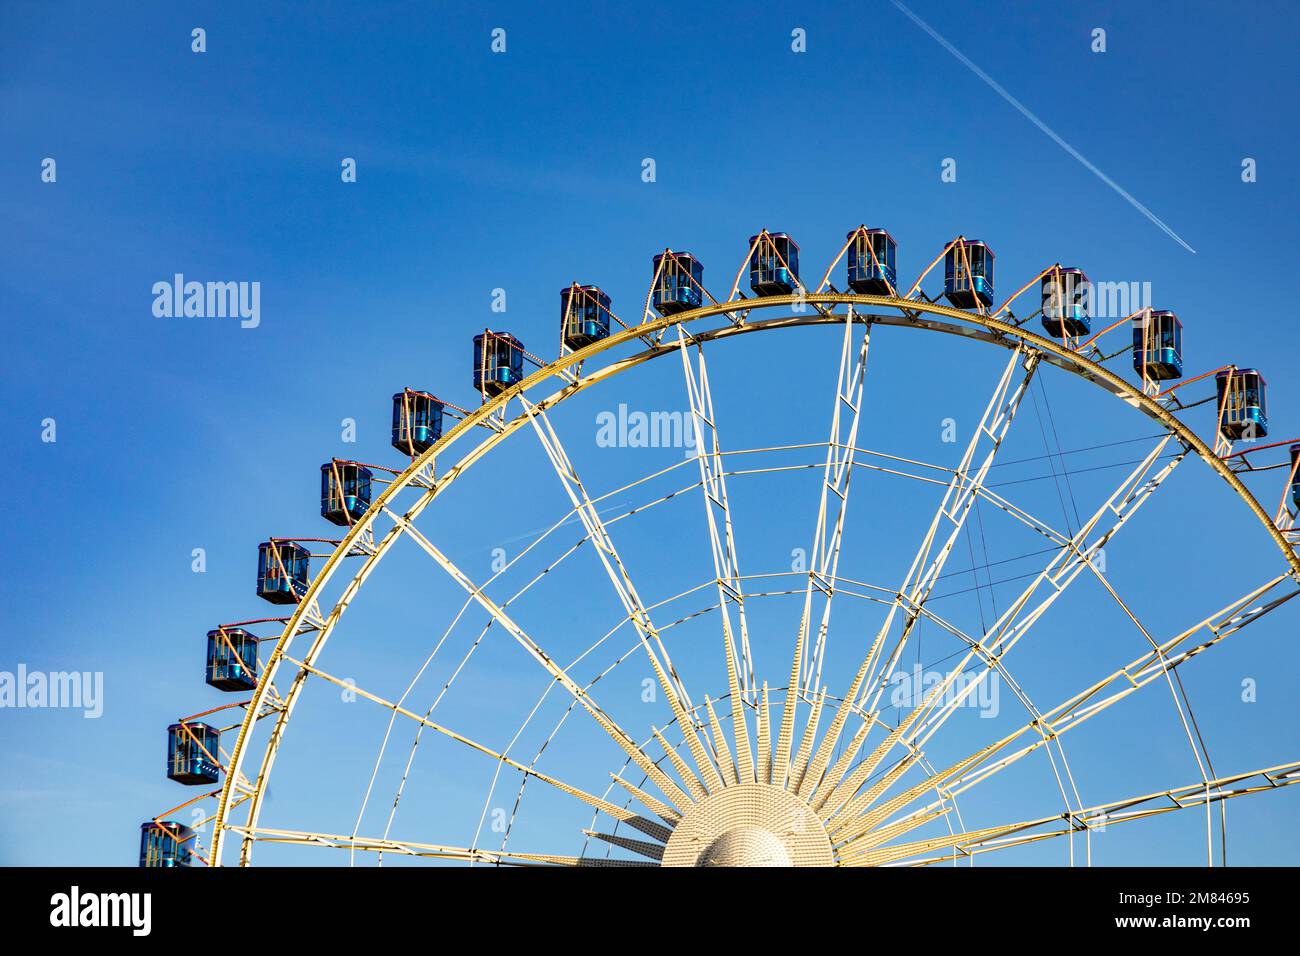 Ferris wheel in Stuttgart city under blue sky Stock Photo